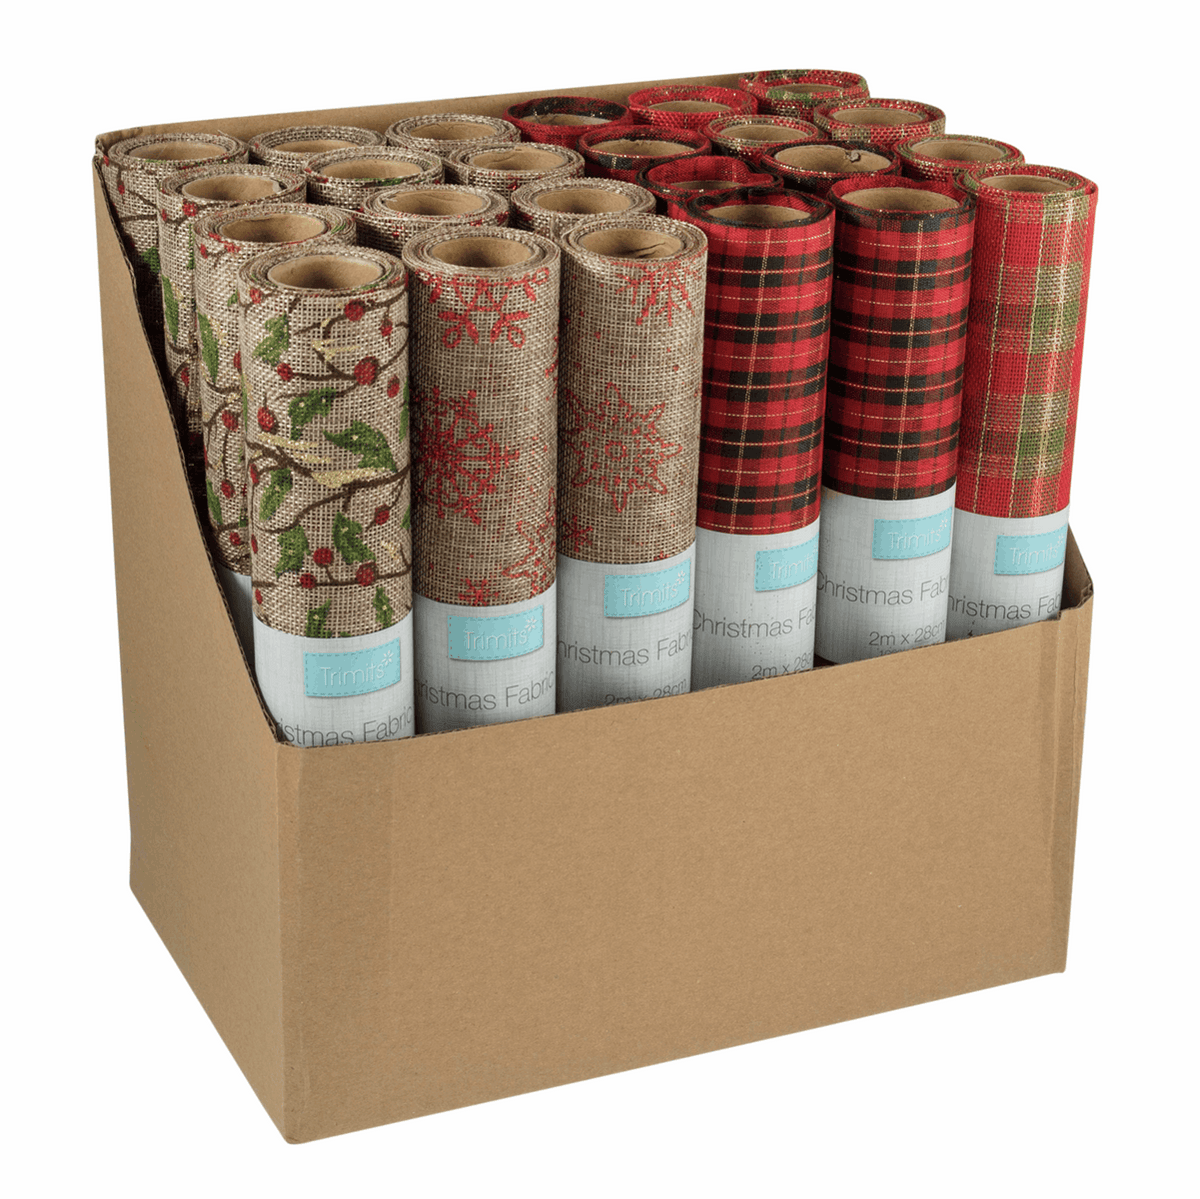 Christmas Fabric Roll 2m x 28cm - Red/Green/Tartan - 4 Designs